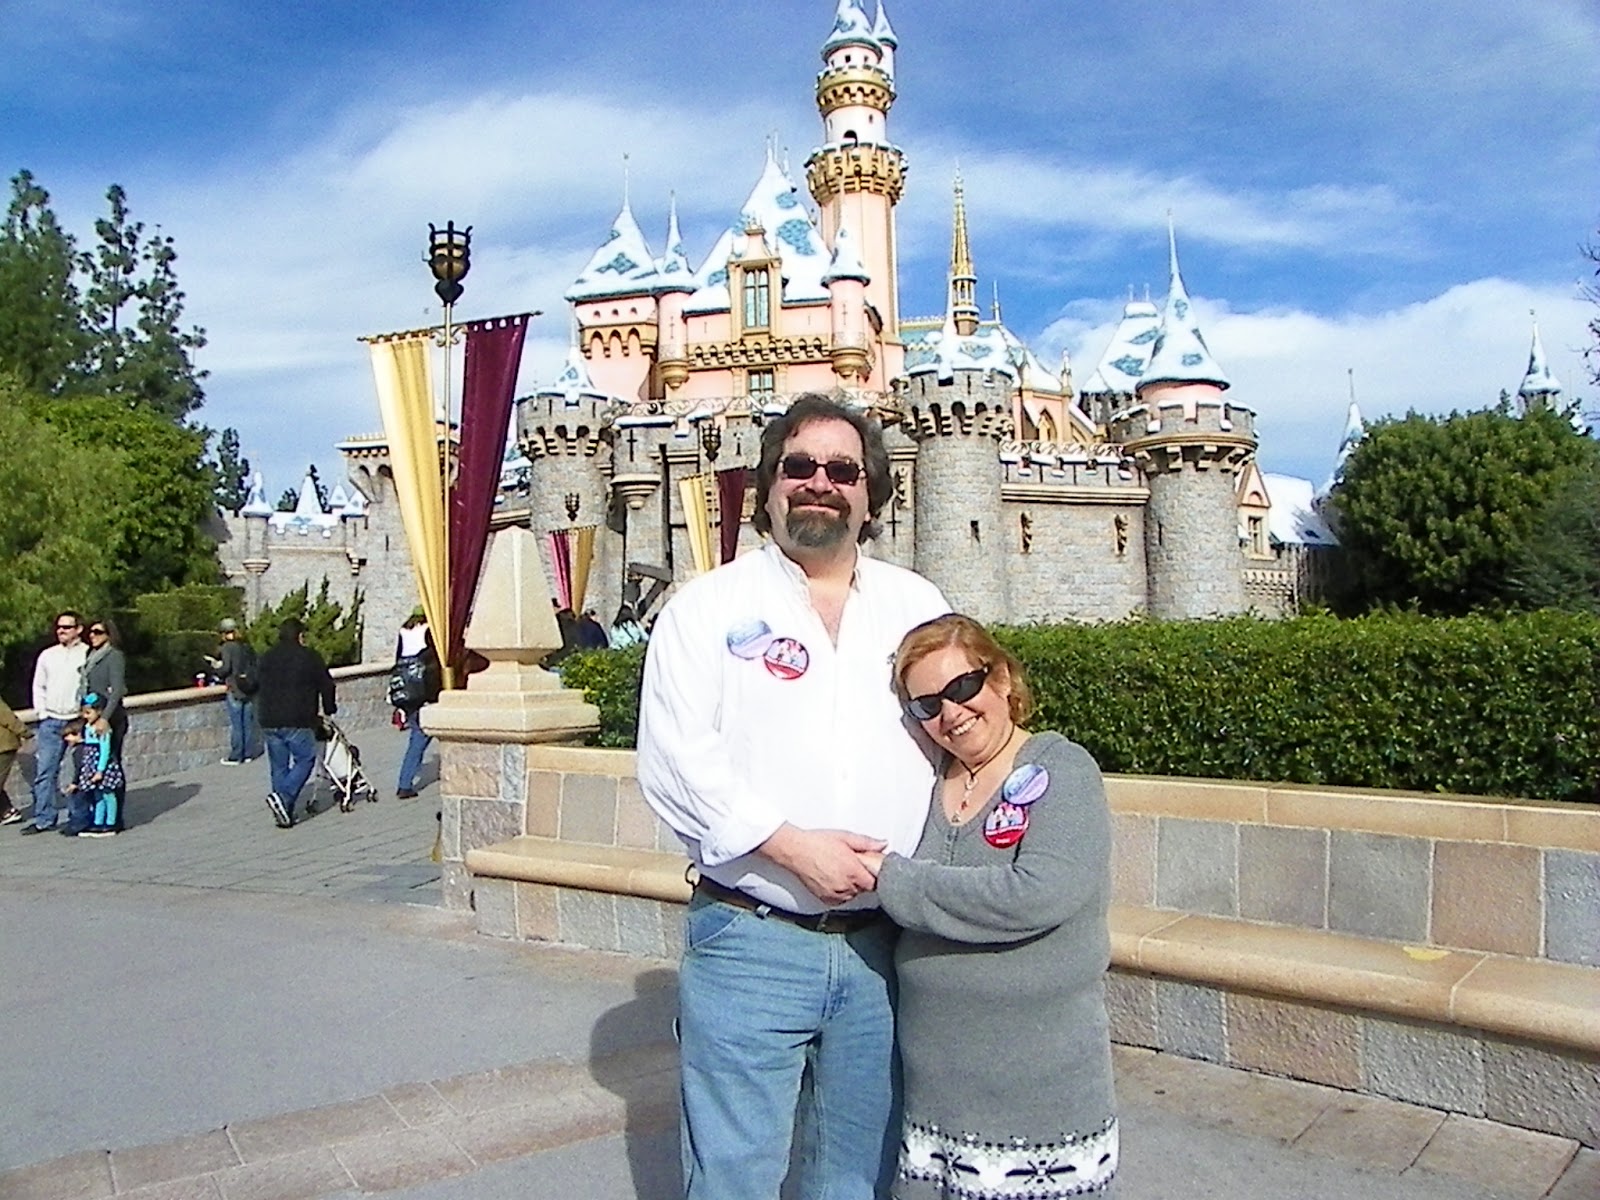 Pixie Pranks and Disney Fun: Disney Parks Castle Picture Taking